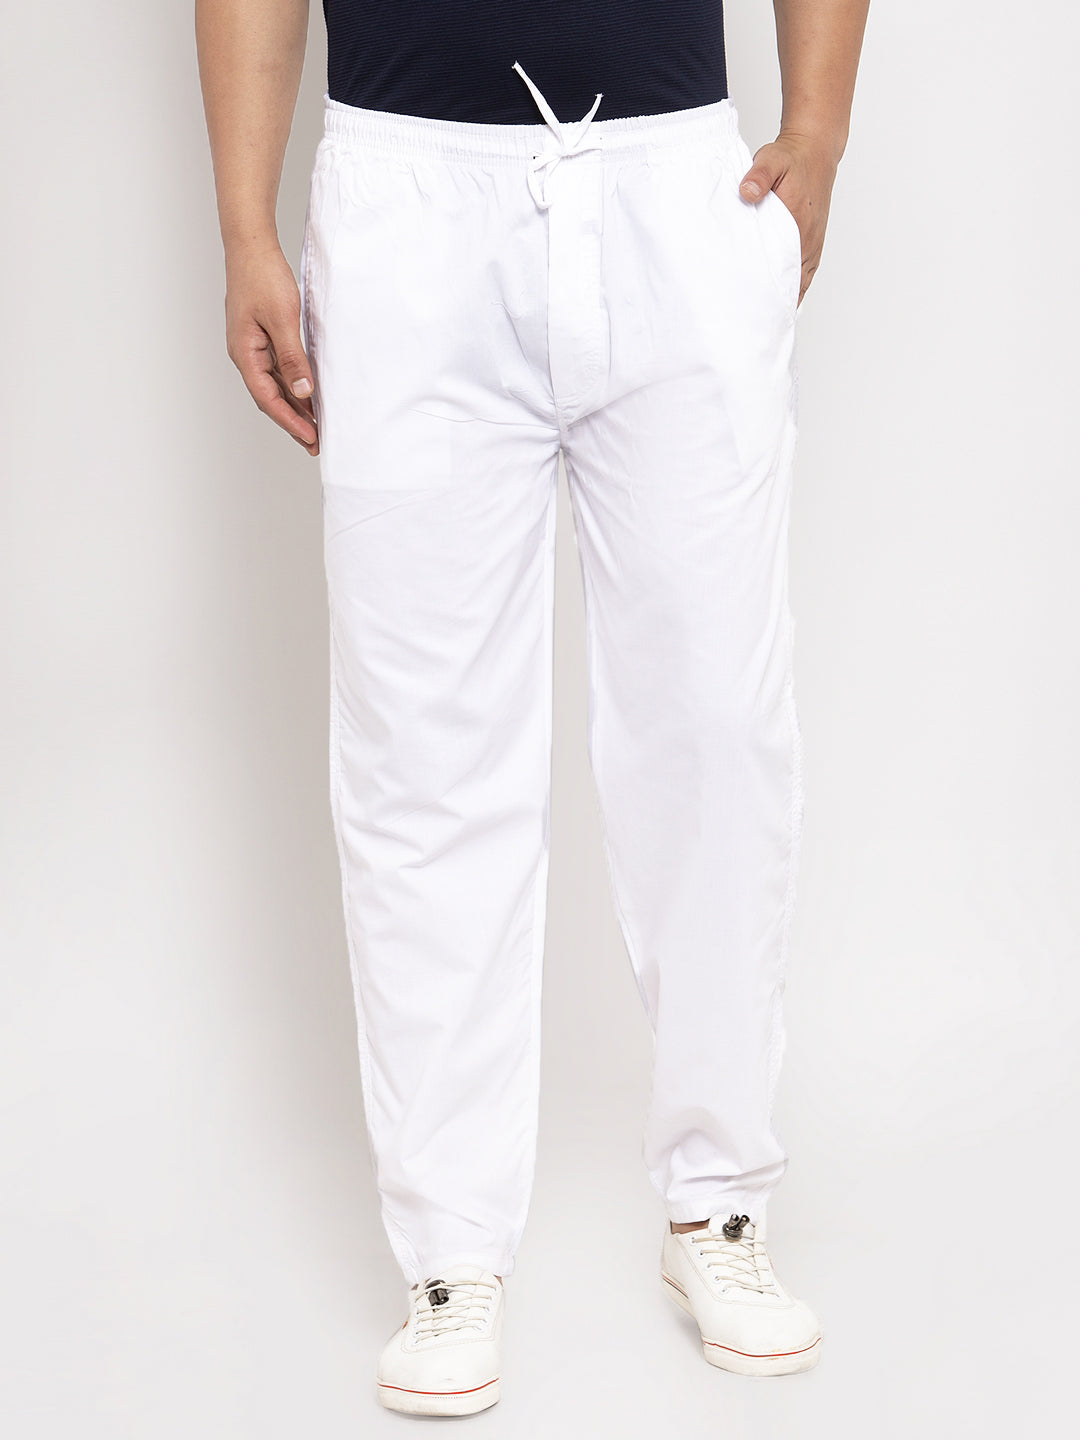 Men's White Solid Cotton Track Pants ( JOG 011White ) - Jainish